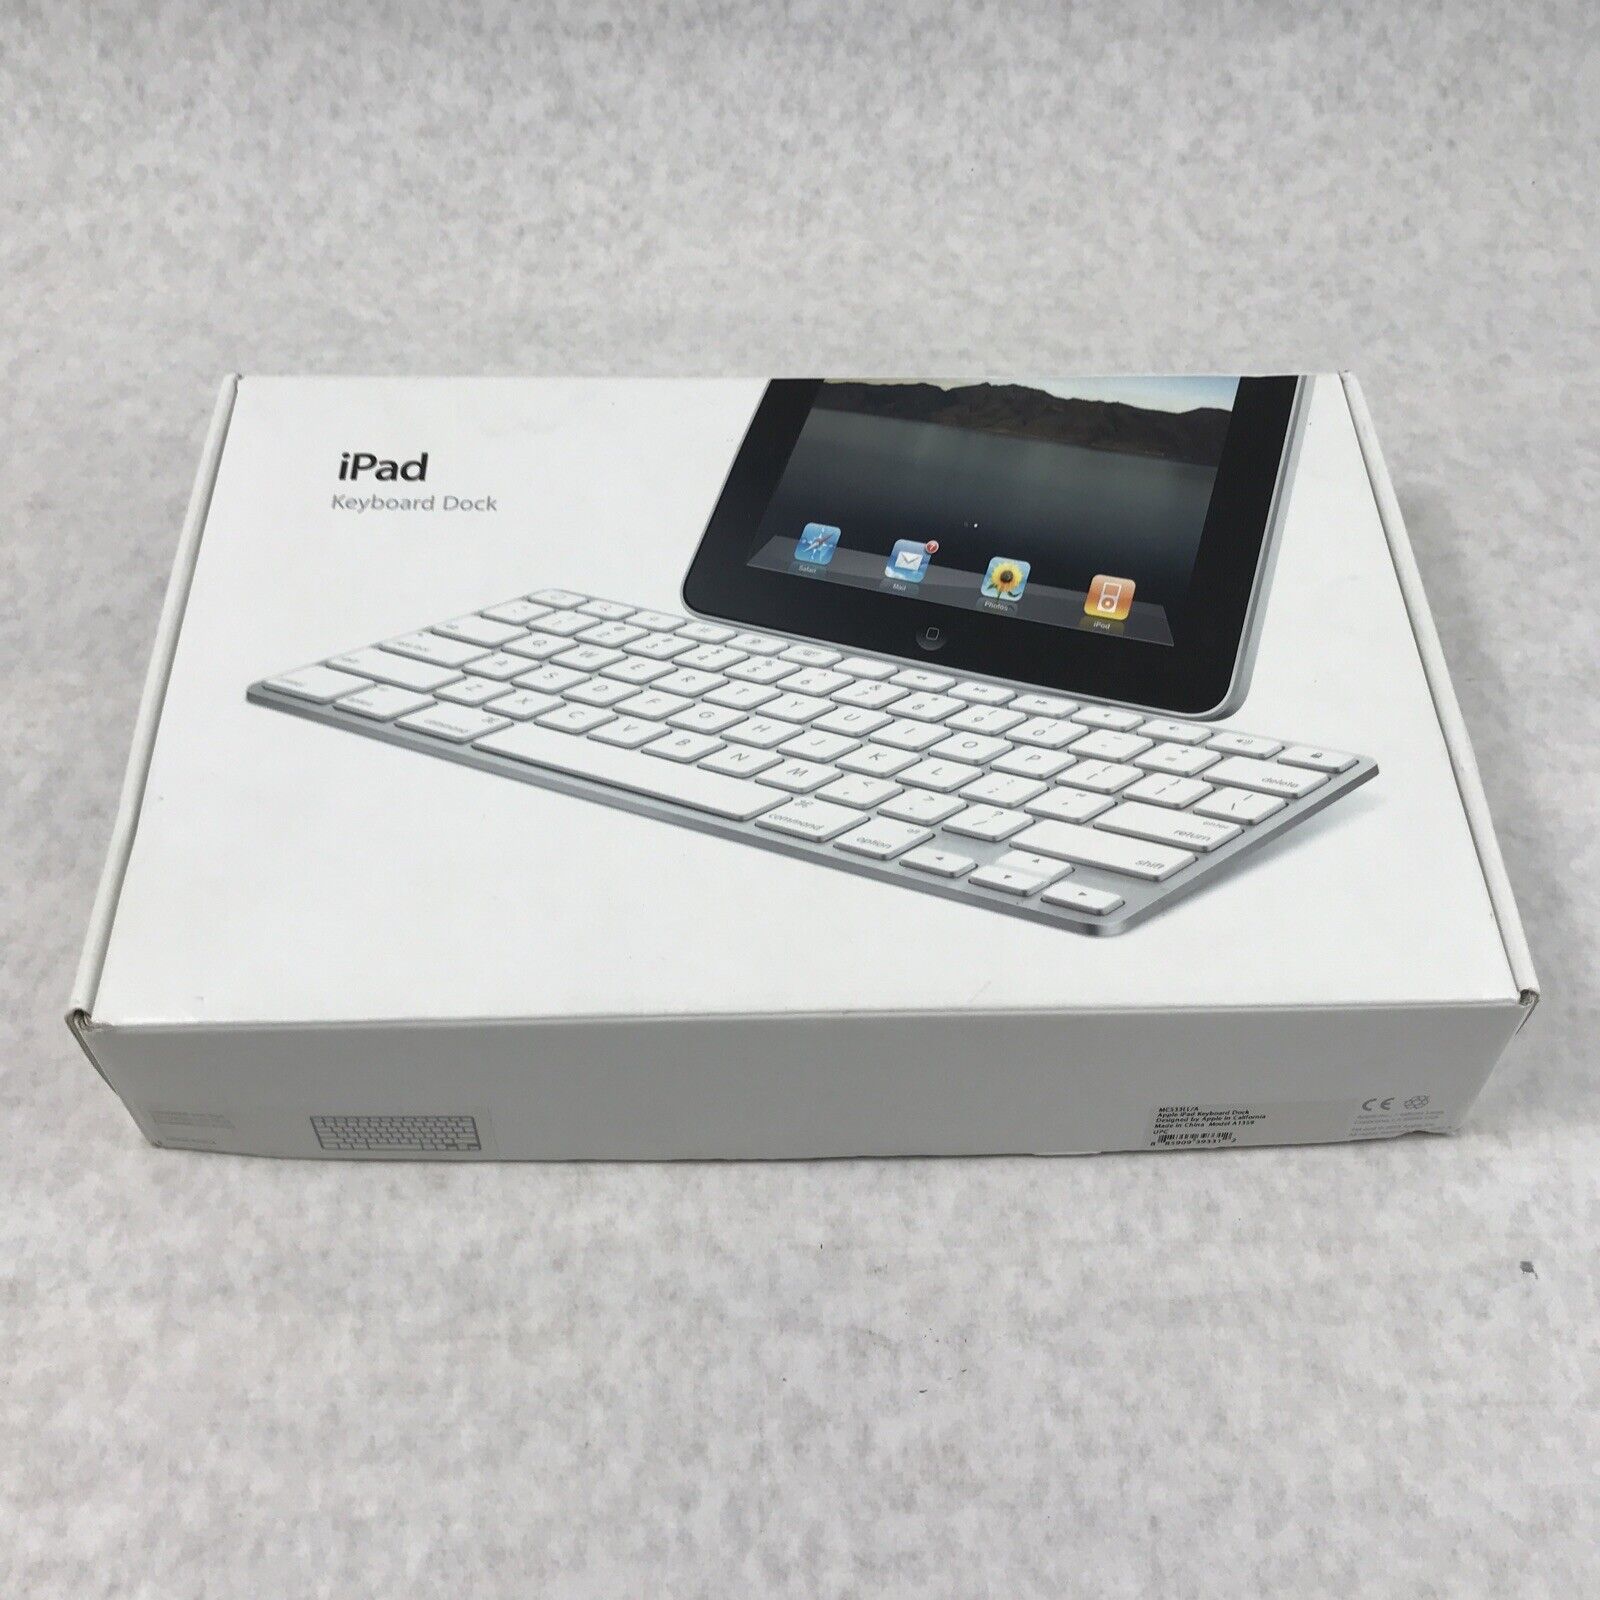 Apple iPad Keyboard Dock A1359 30-Pin 1st and 2nd Generation iPad W/ Manual